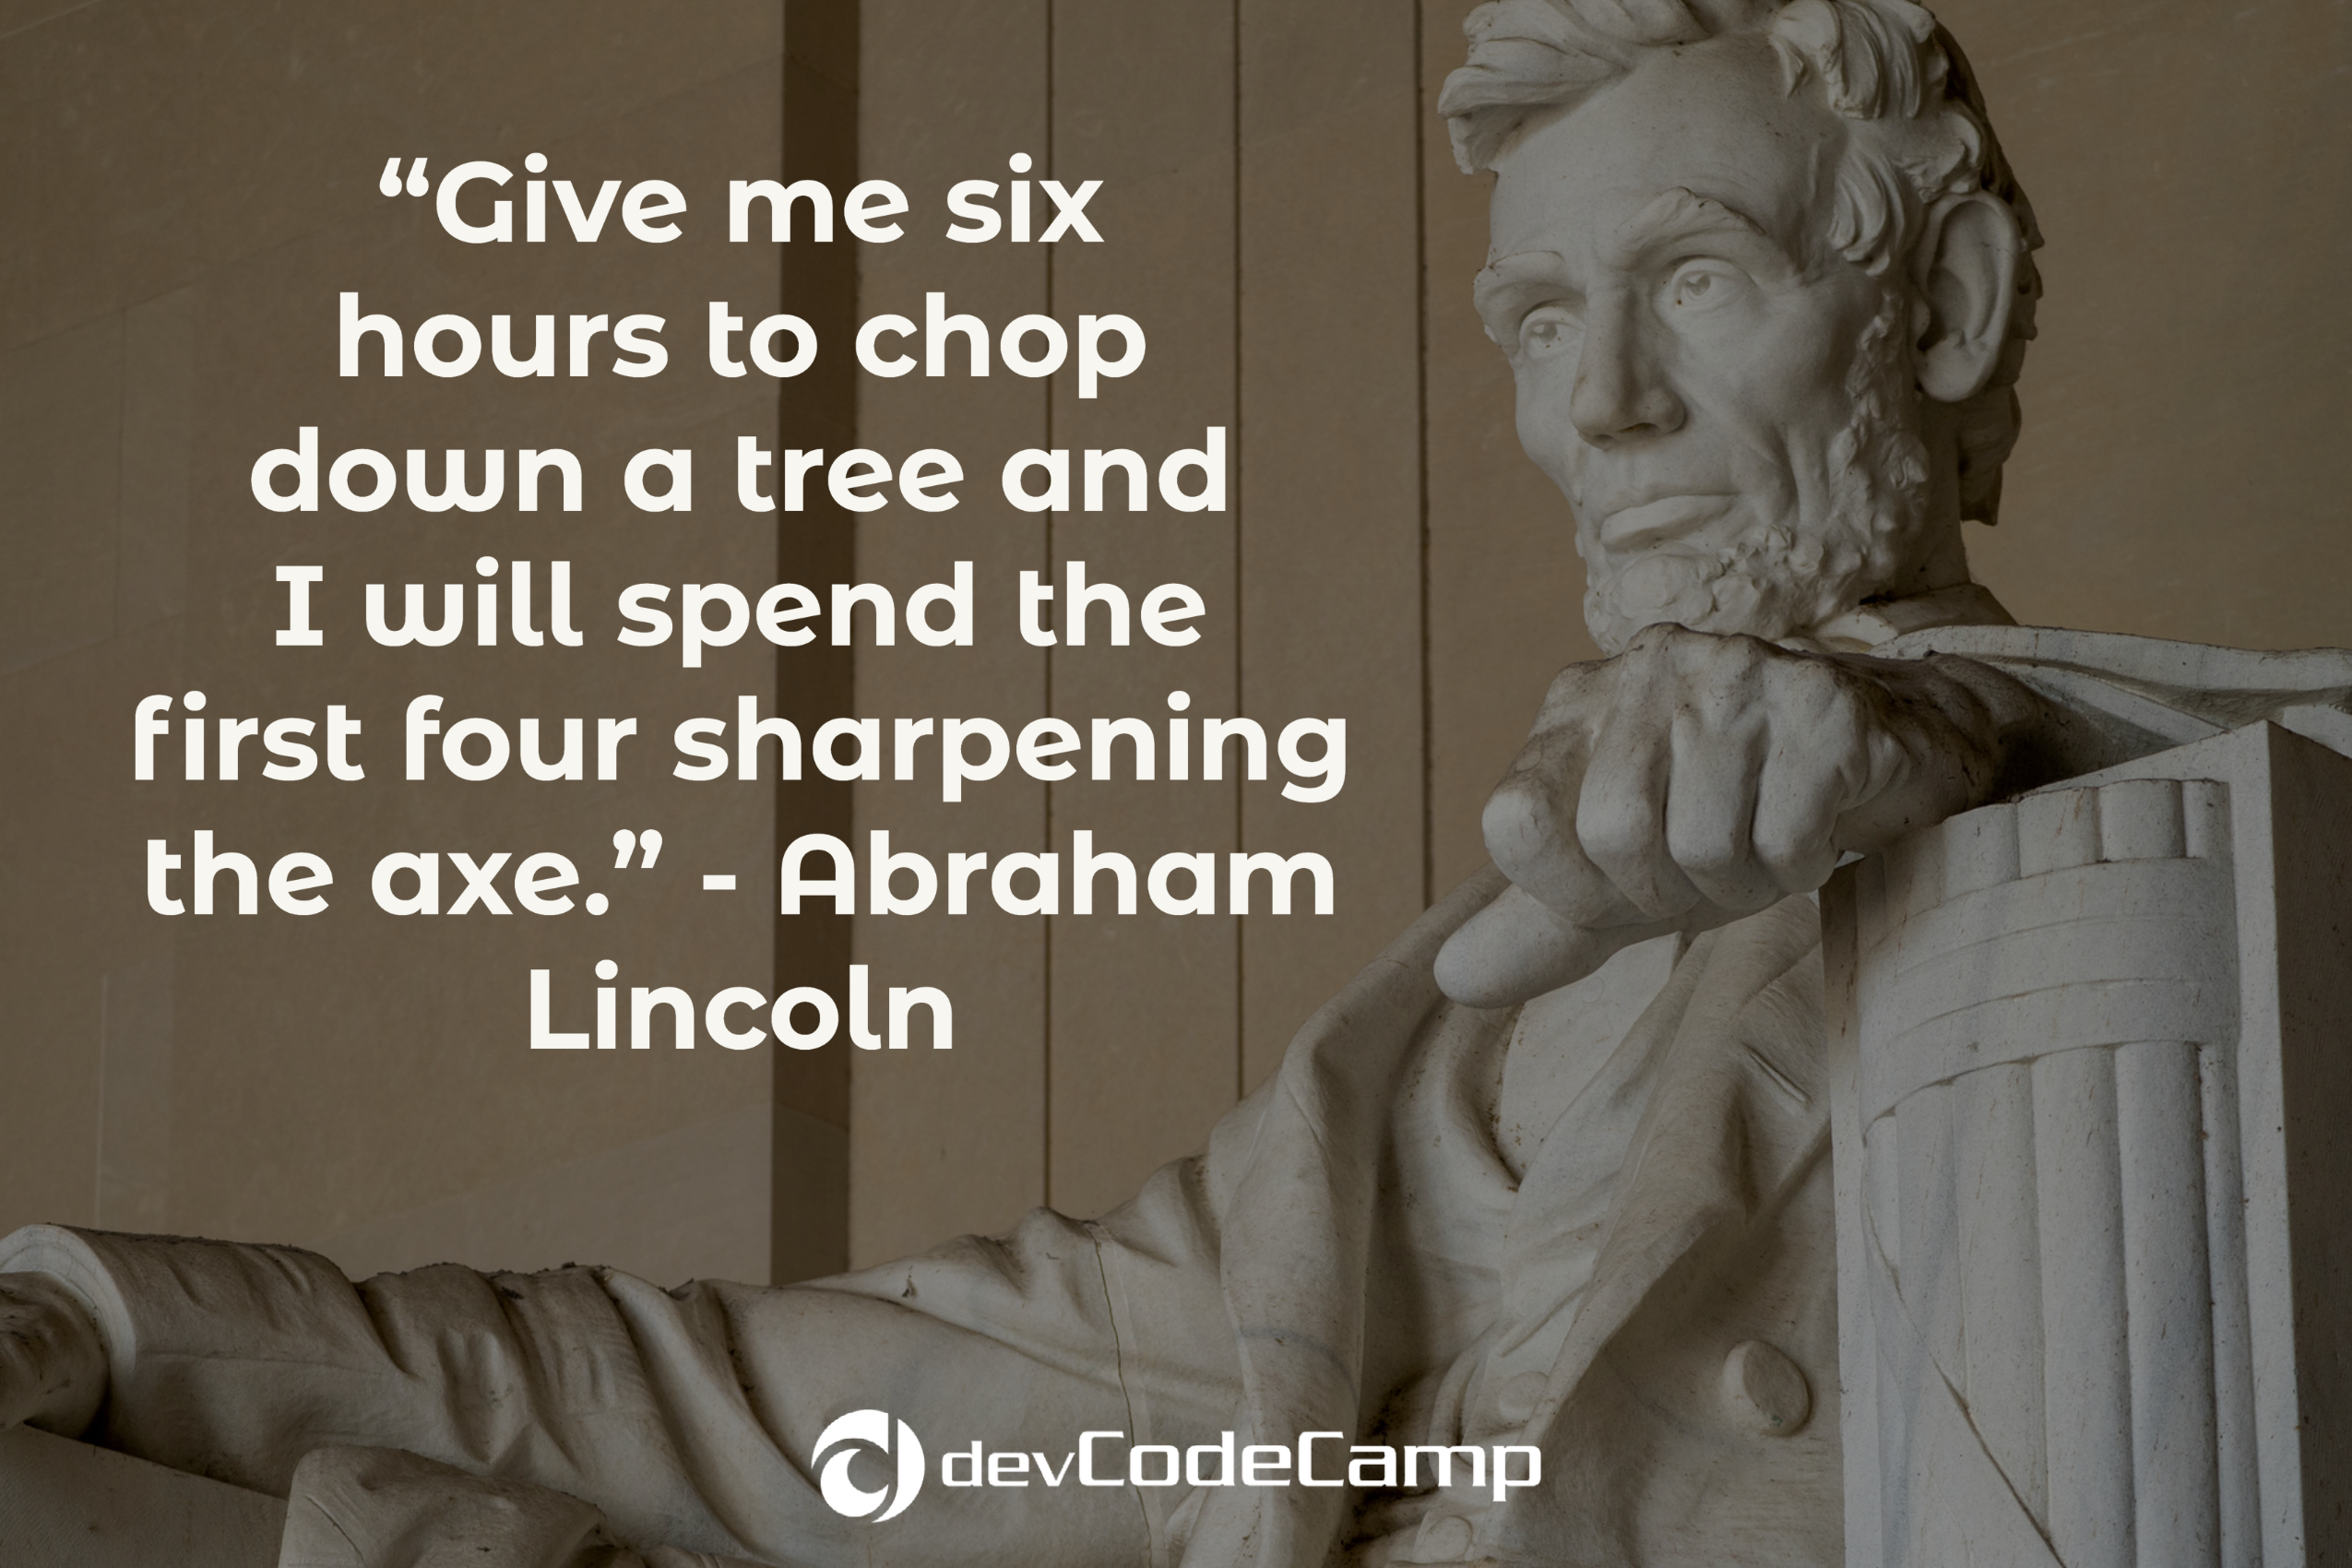 Abraham Lincoln advice